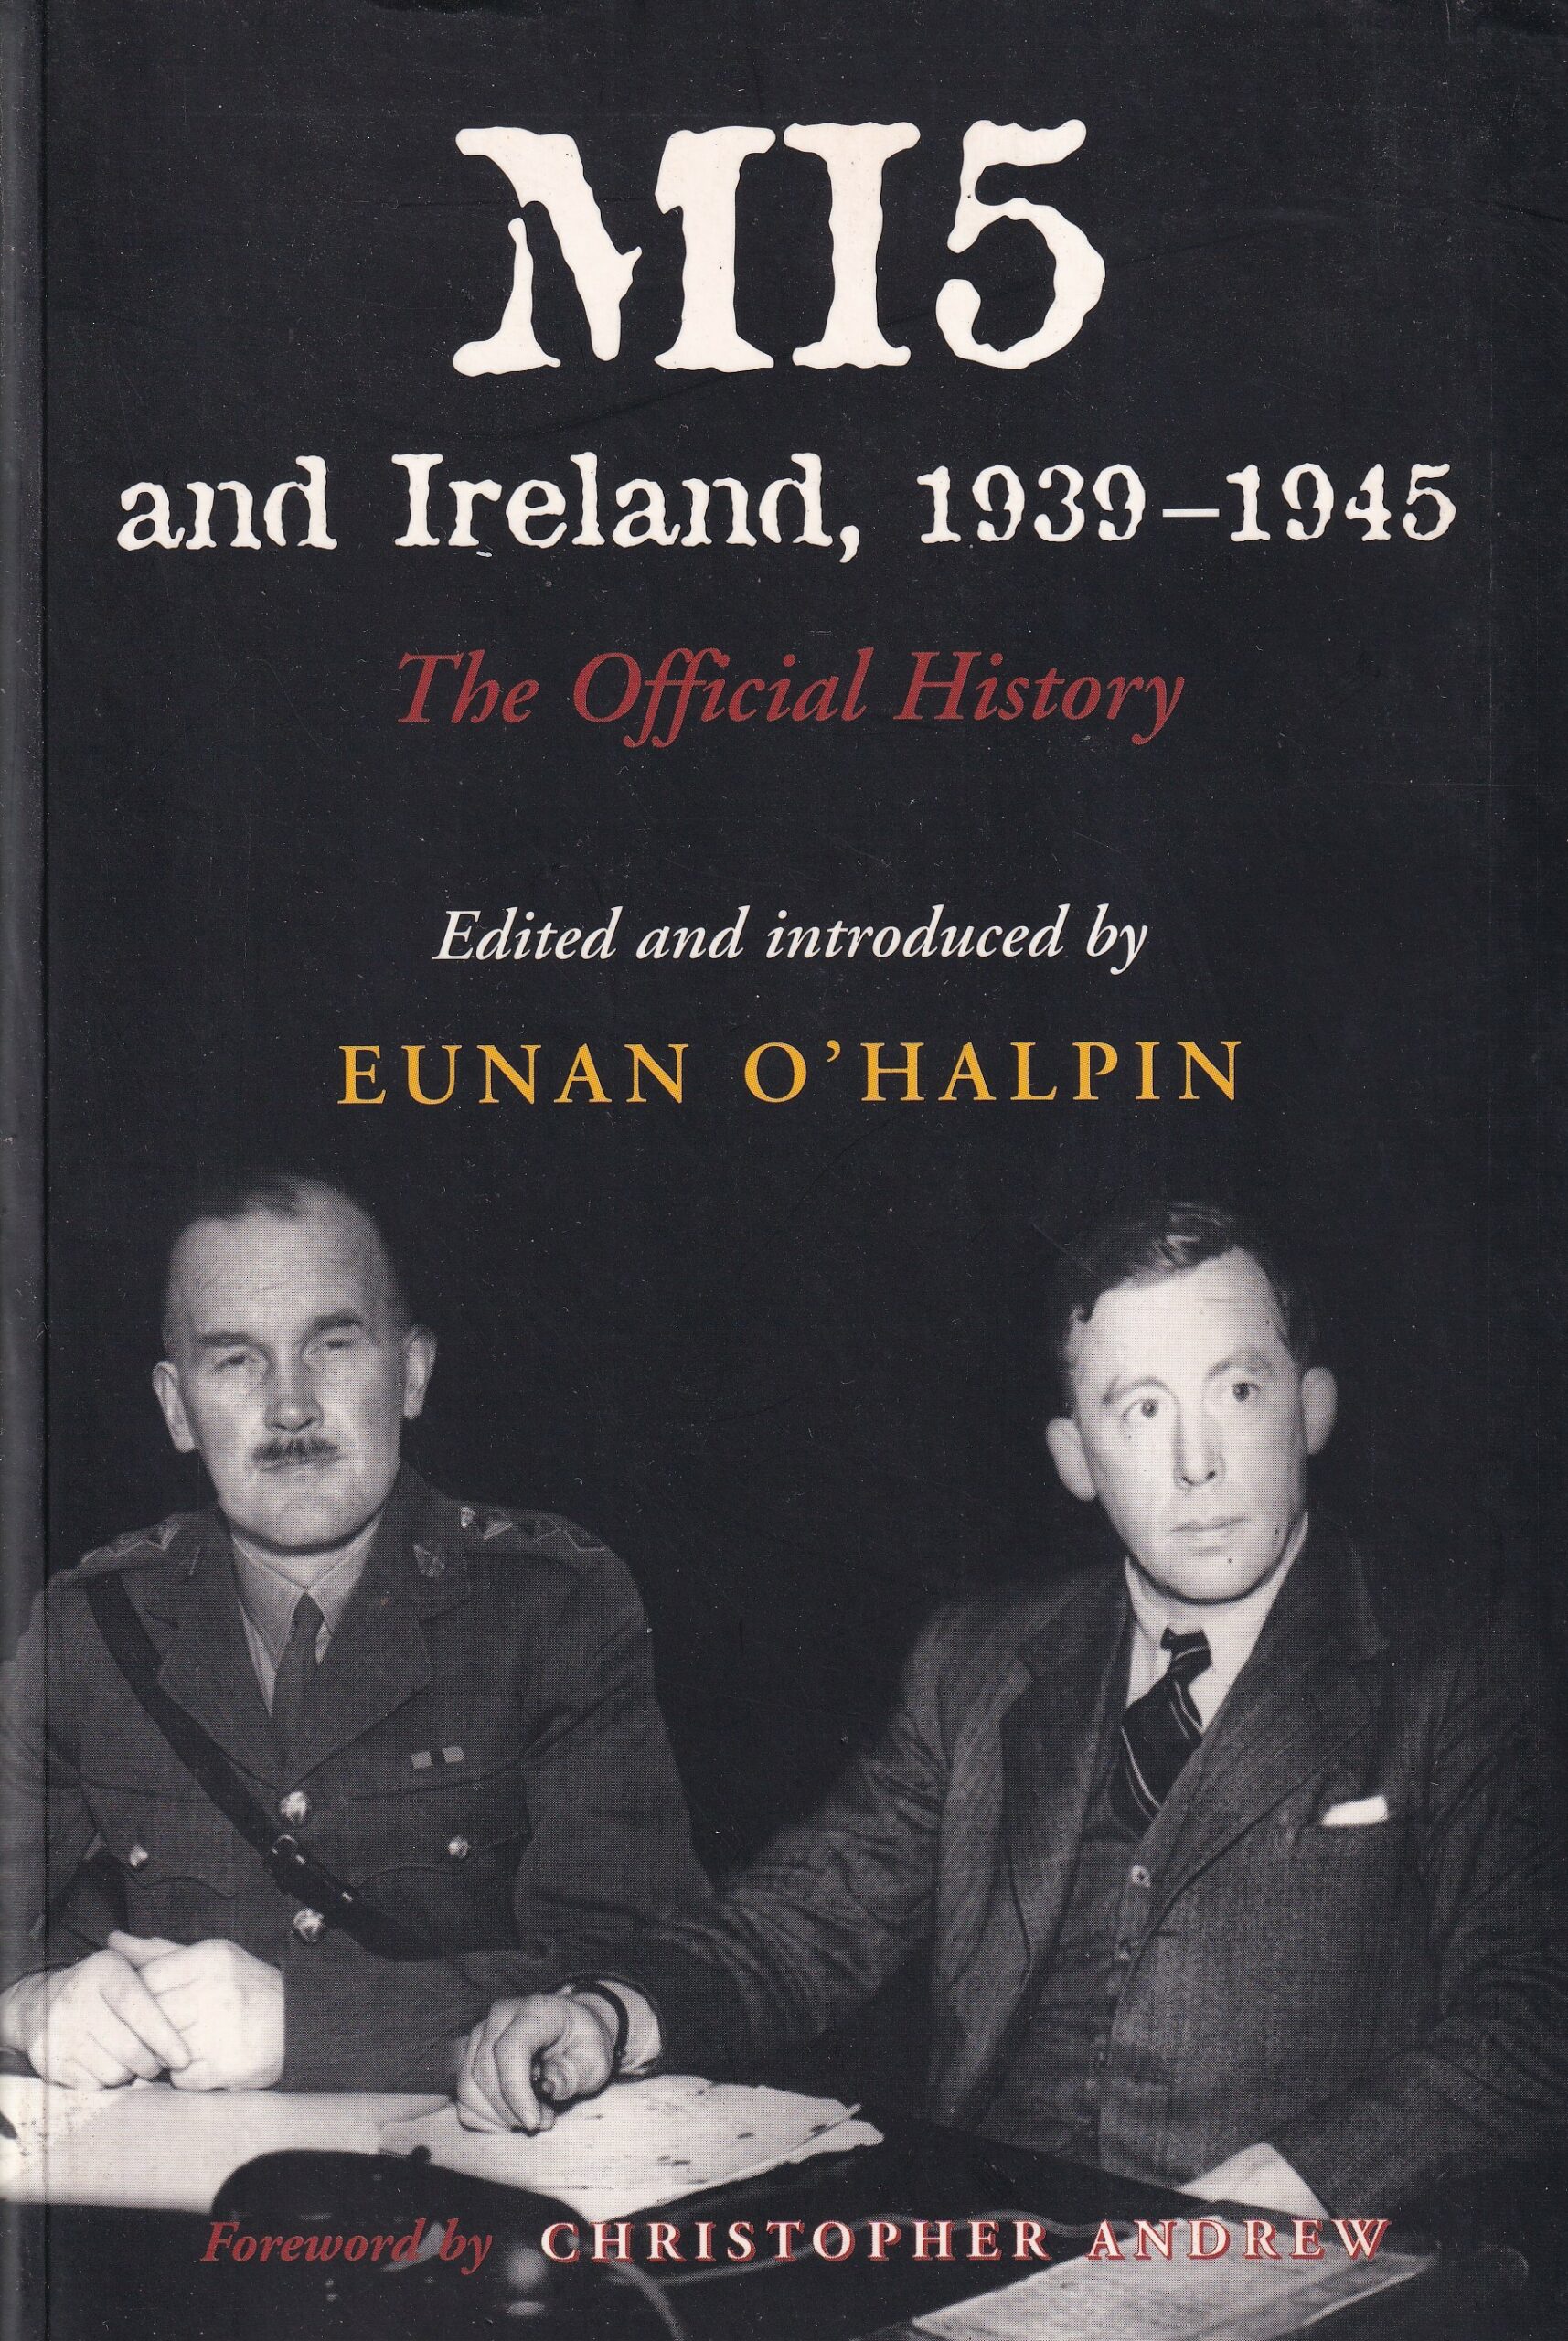 MI5 and Ireland, 1939-1945: The Official History by Eunan O'Halpin (Ed.)